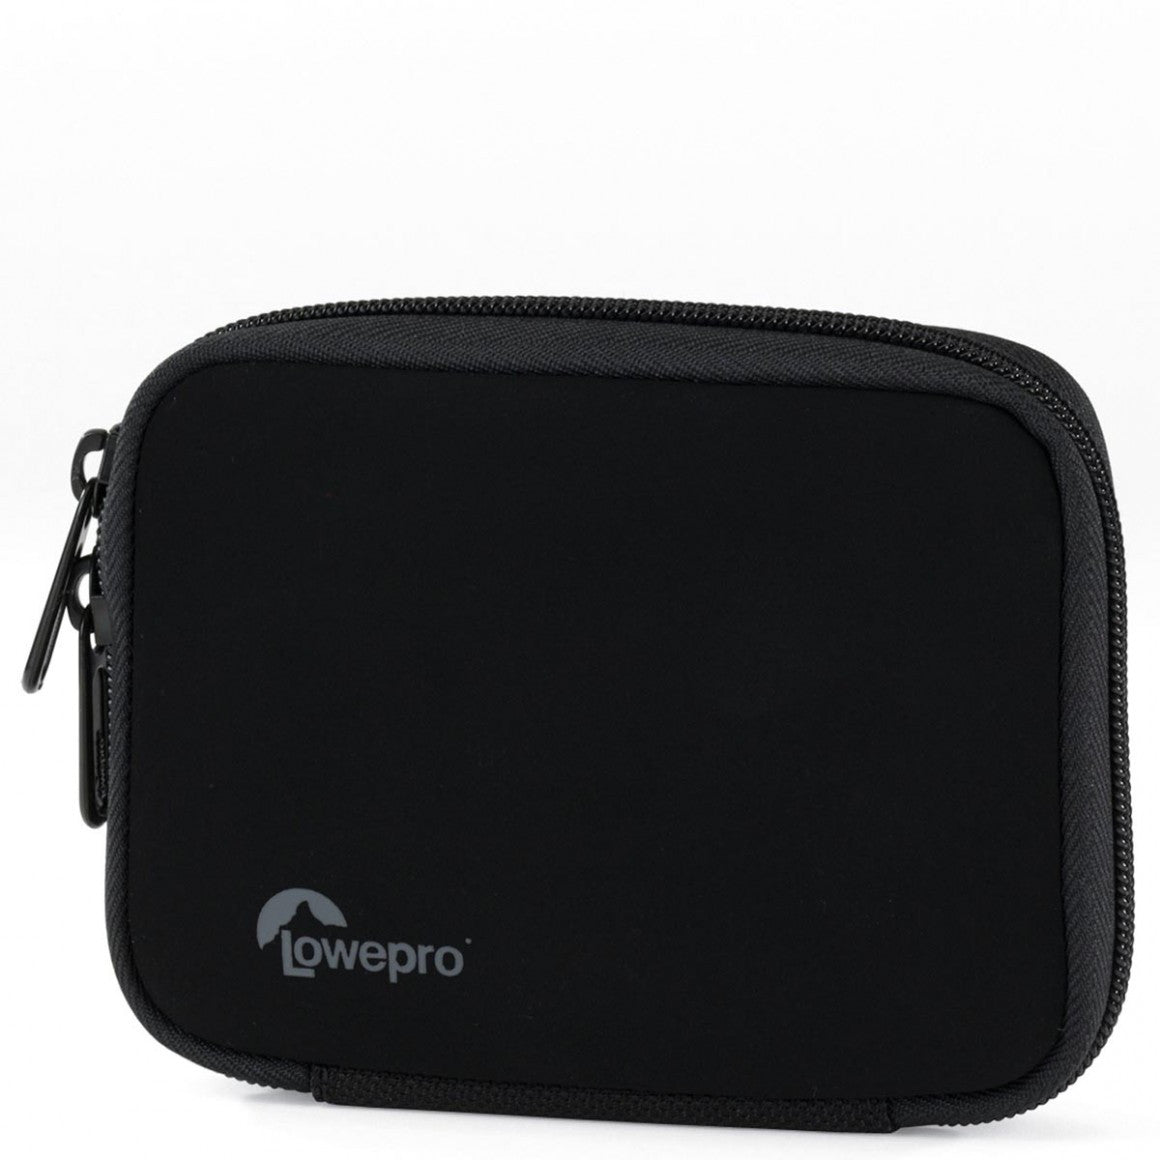 Lowepro Compact Media Case 20 (black), discontinued, Lowepro - Pictureline  - 1